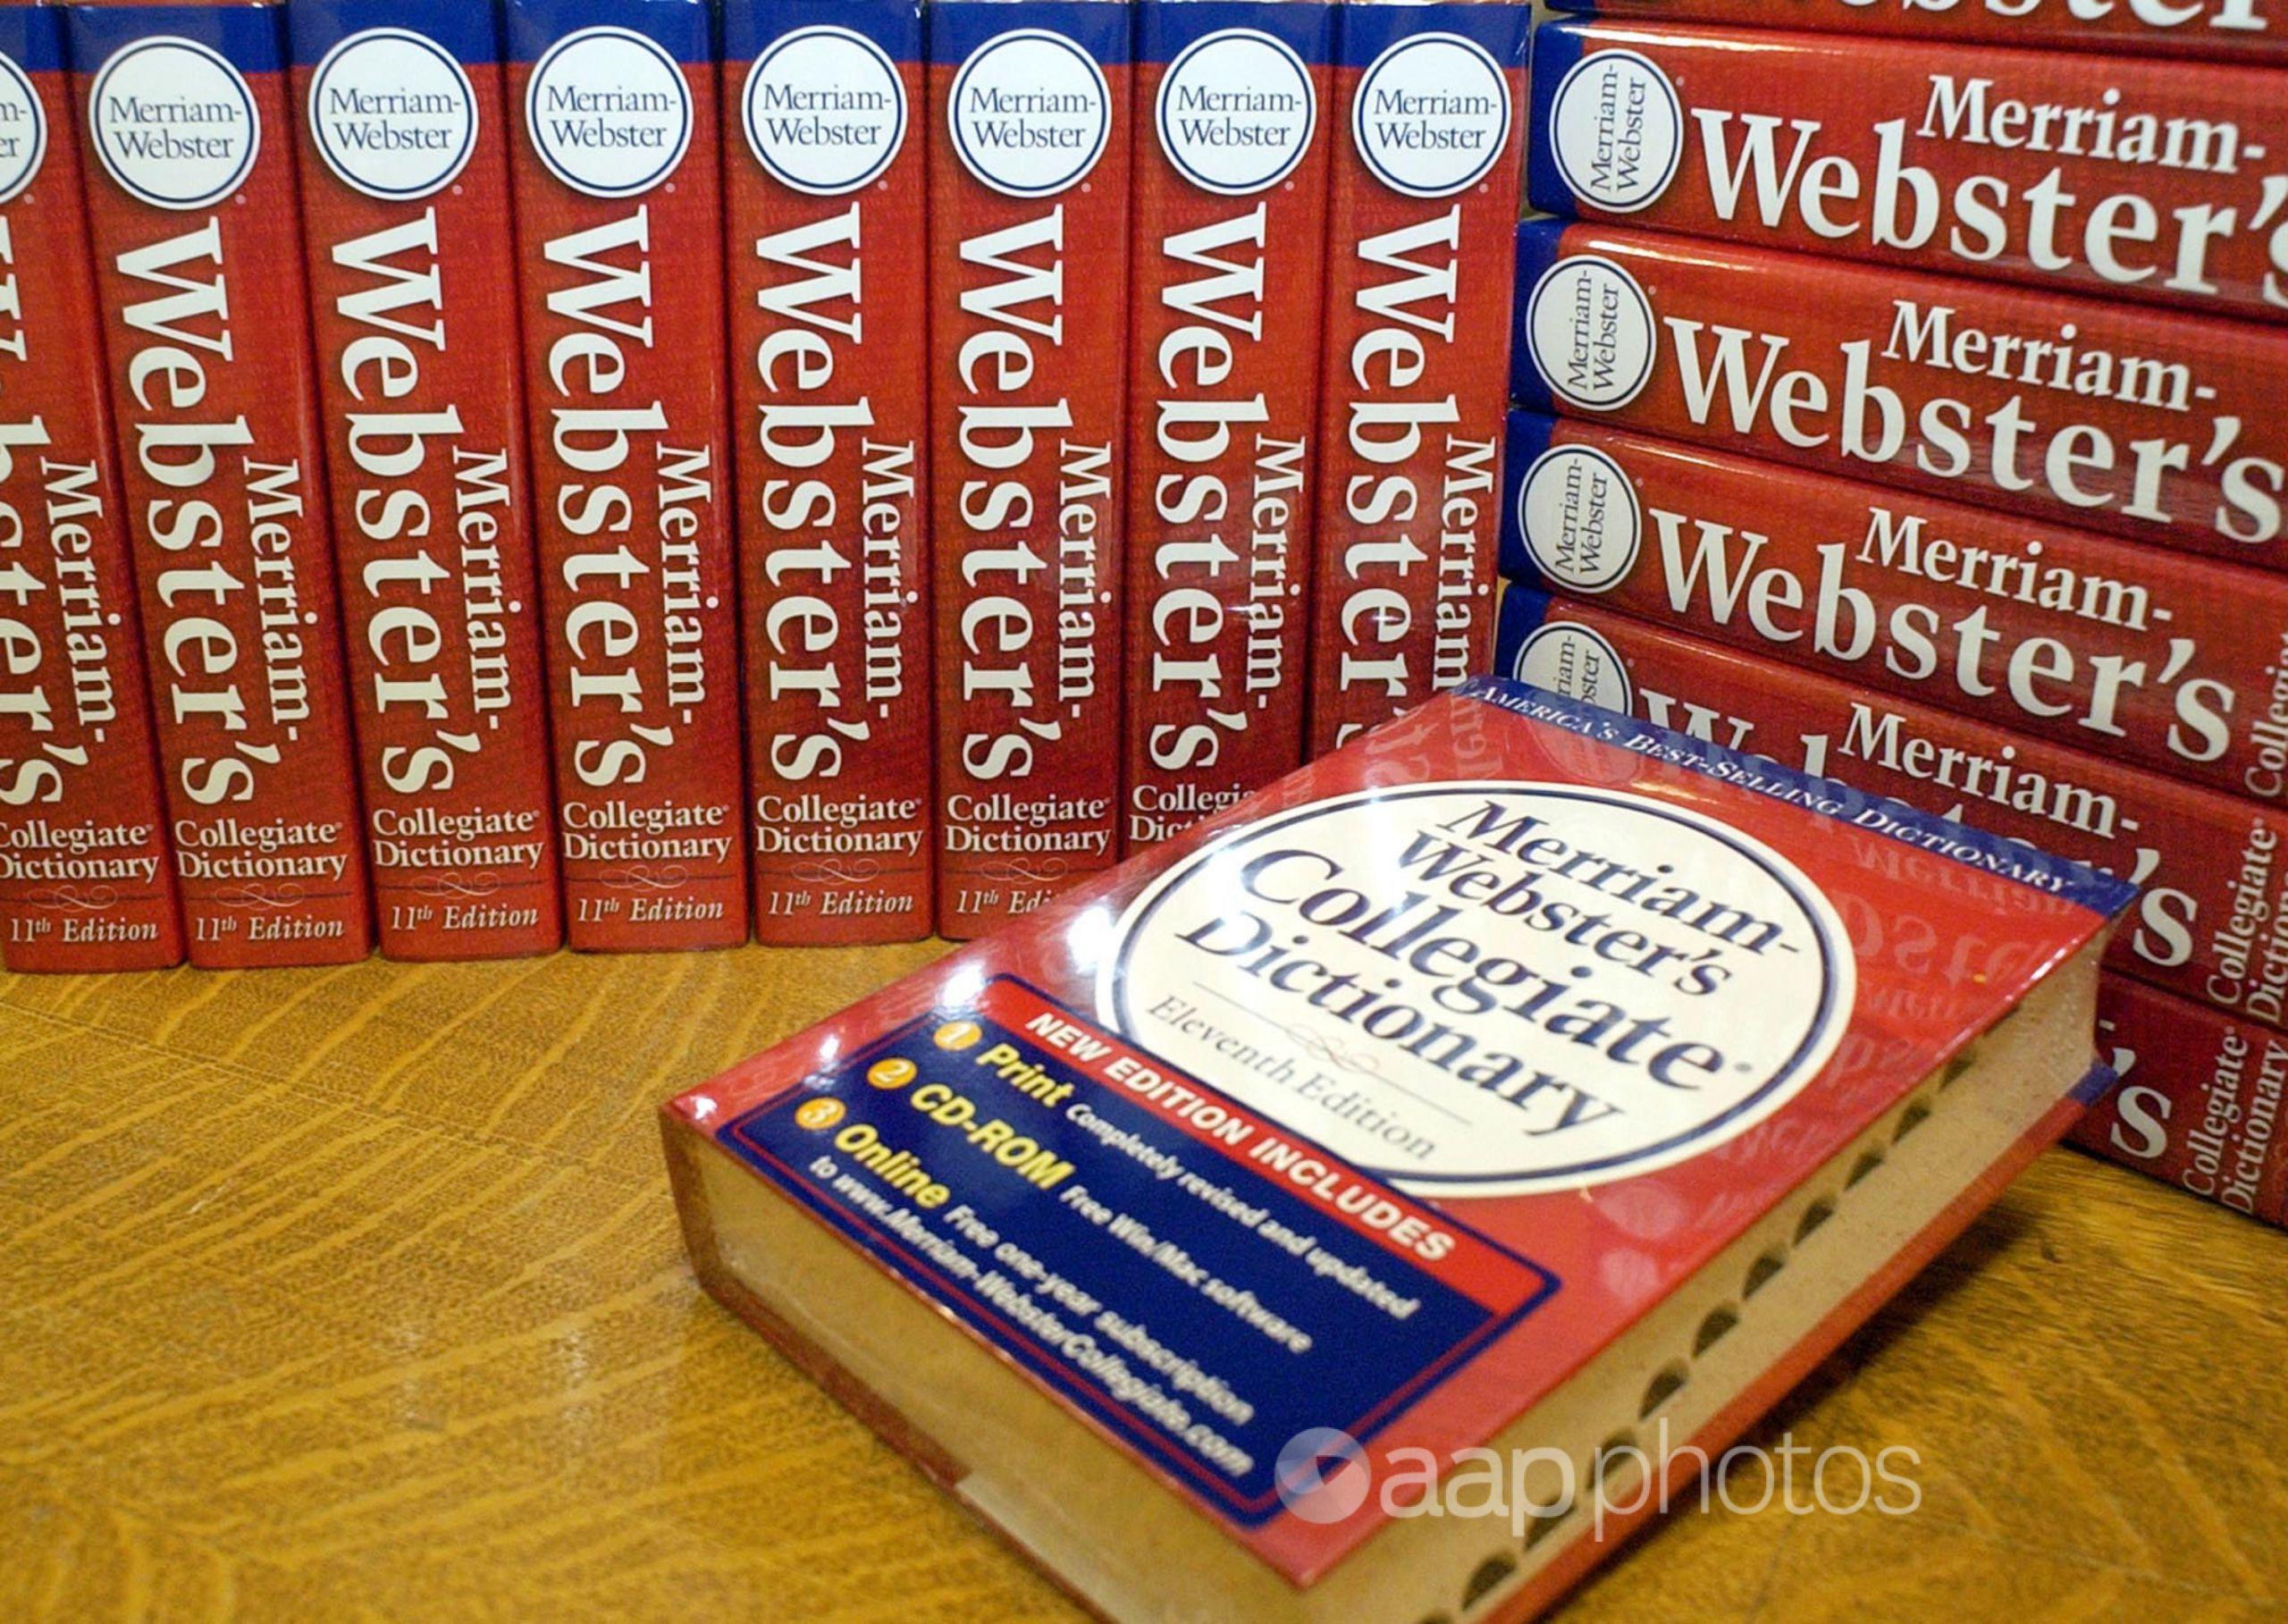 Merriam-Webster dictionaries